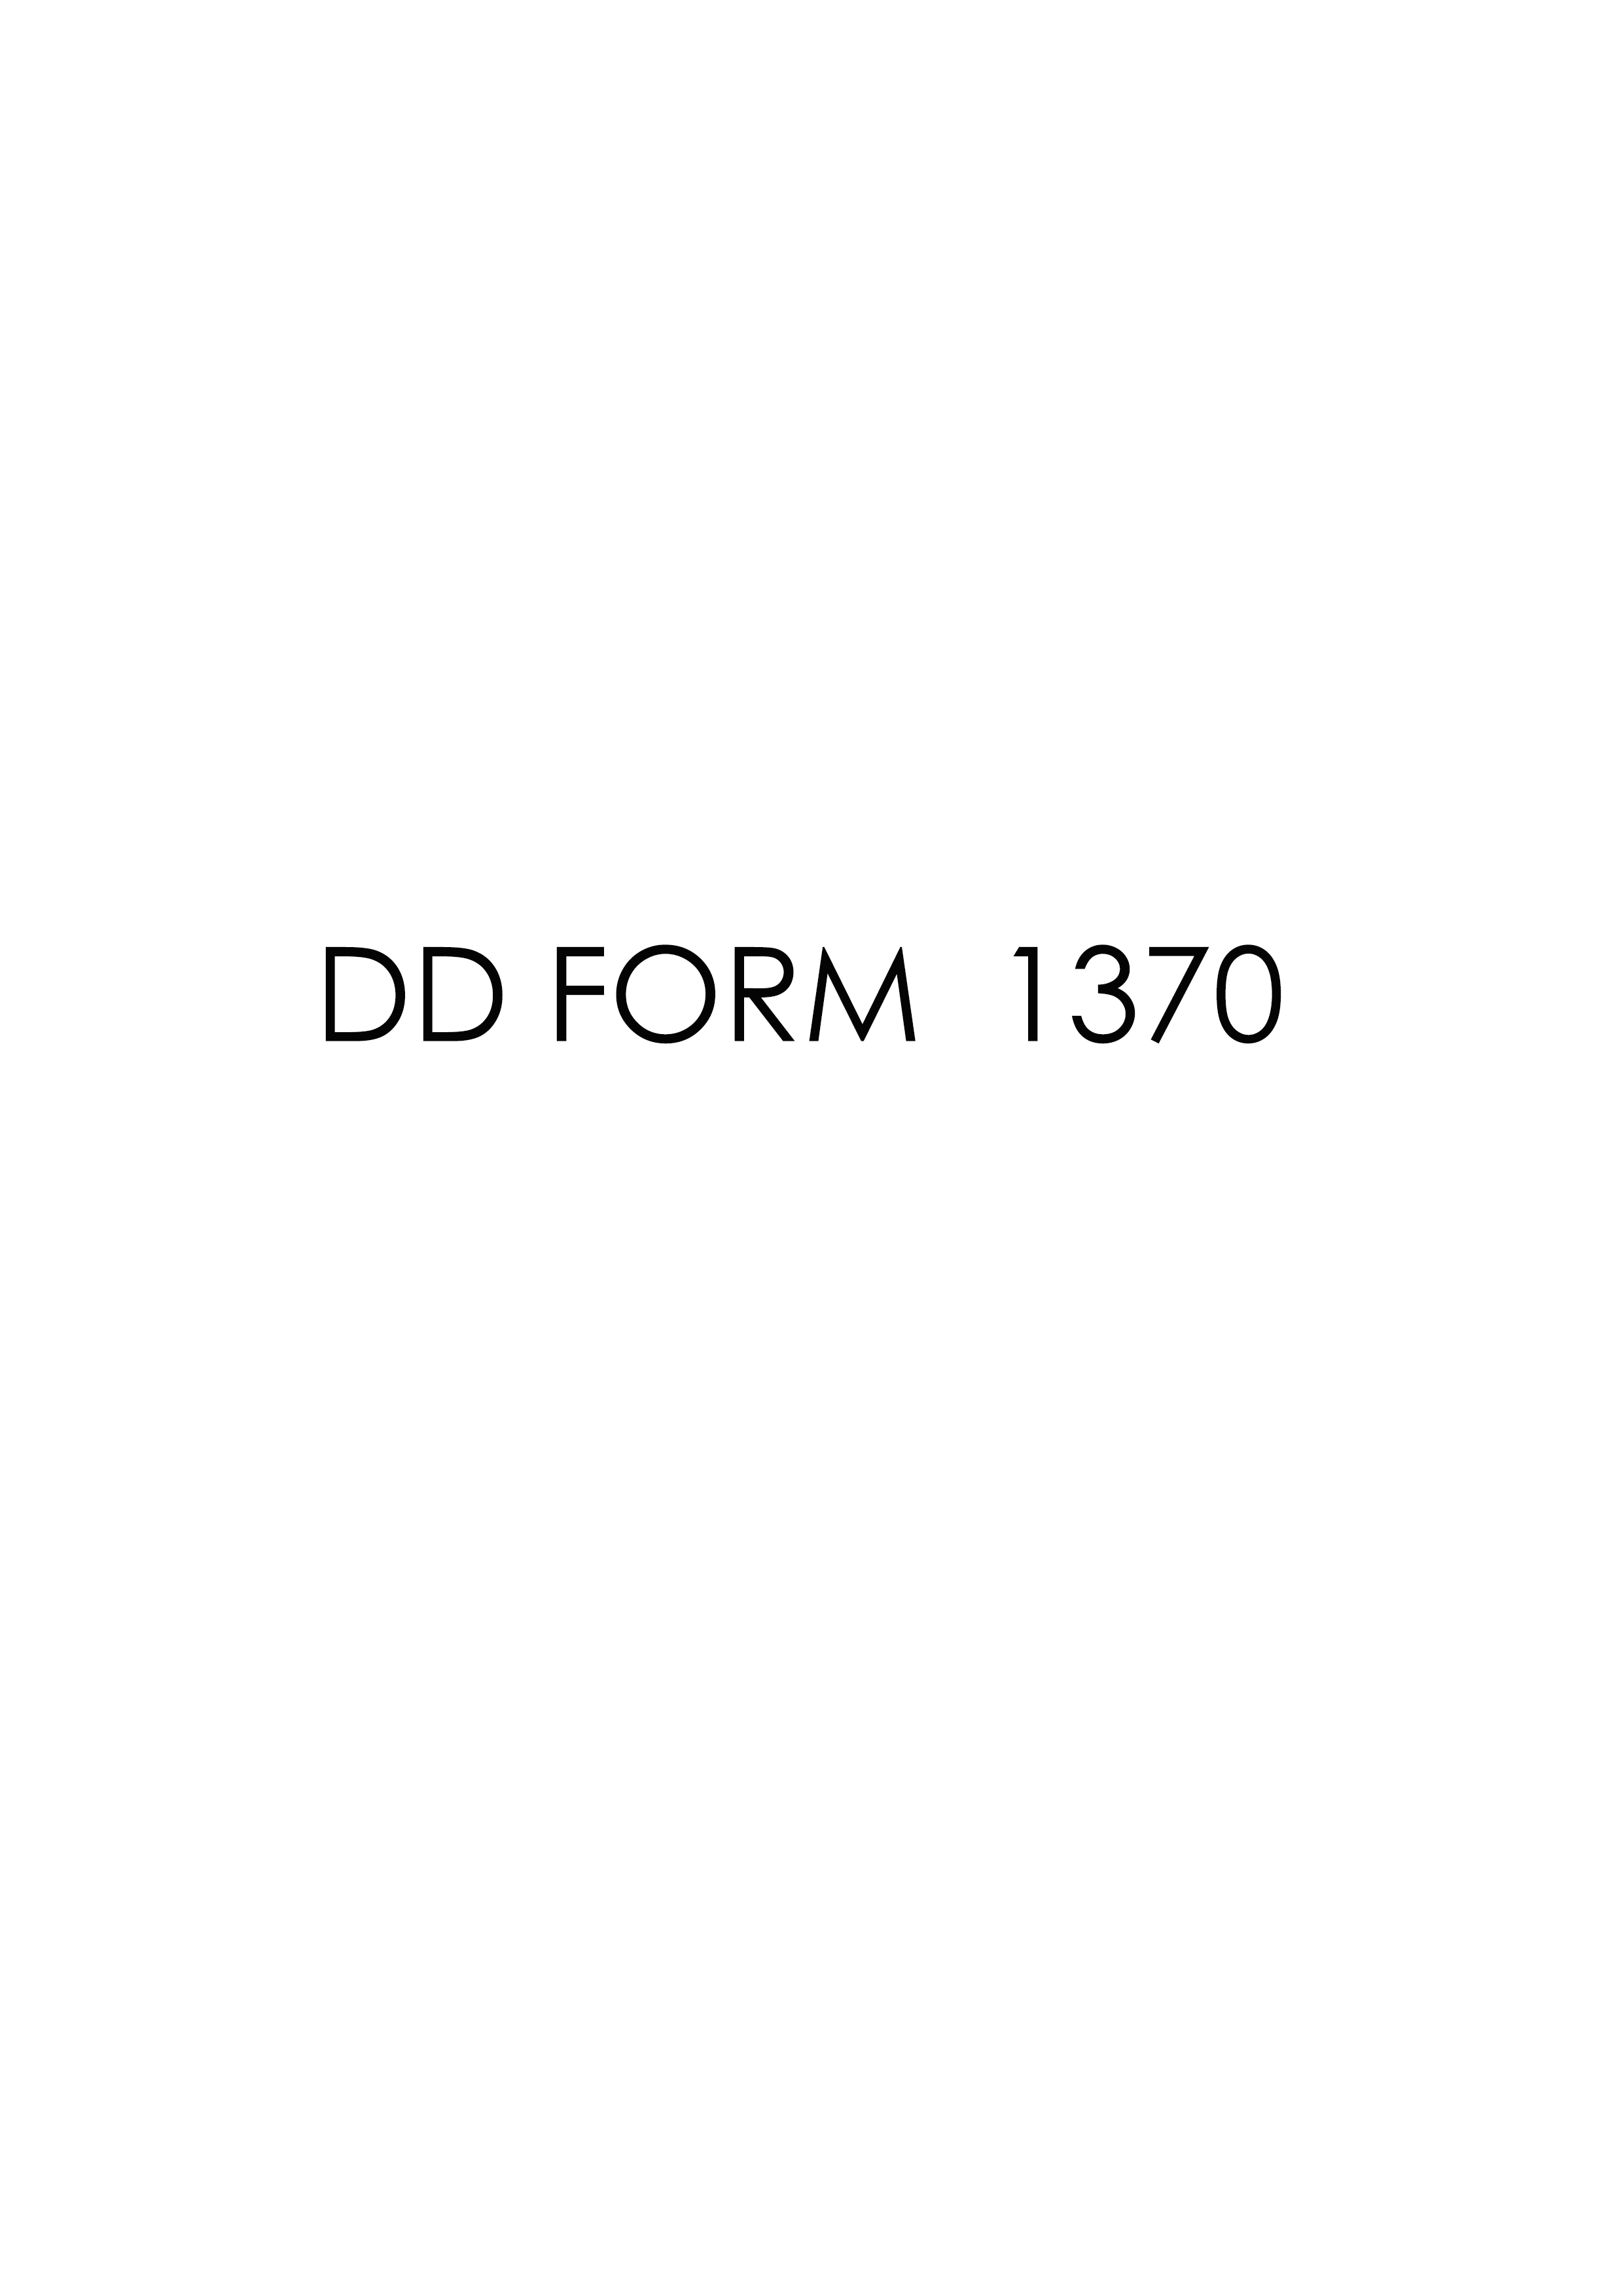 Download dd form 1370